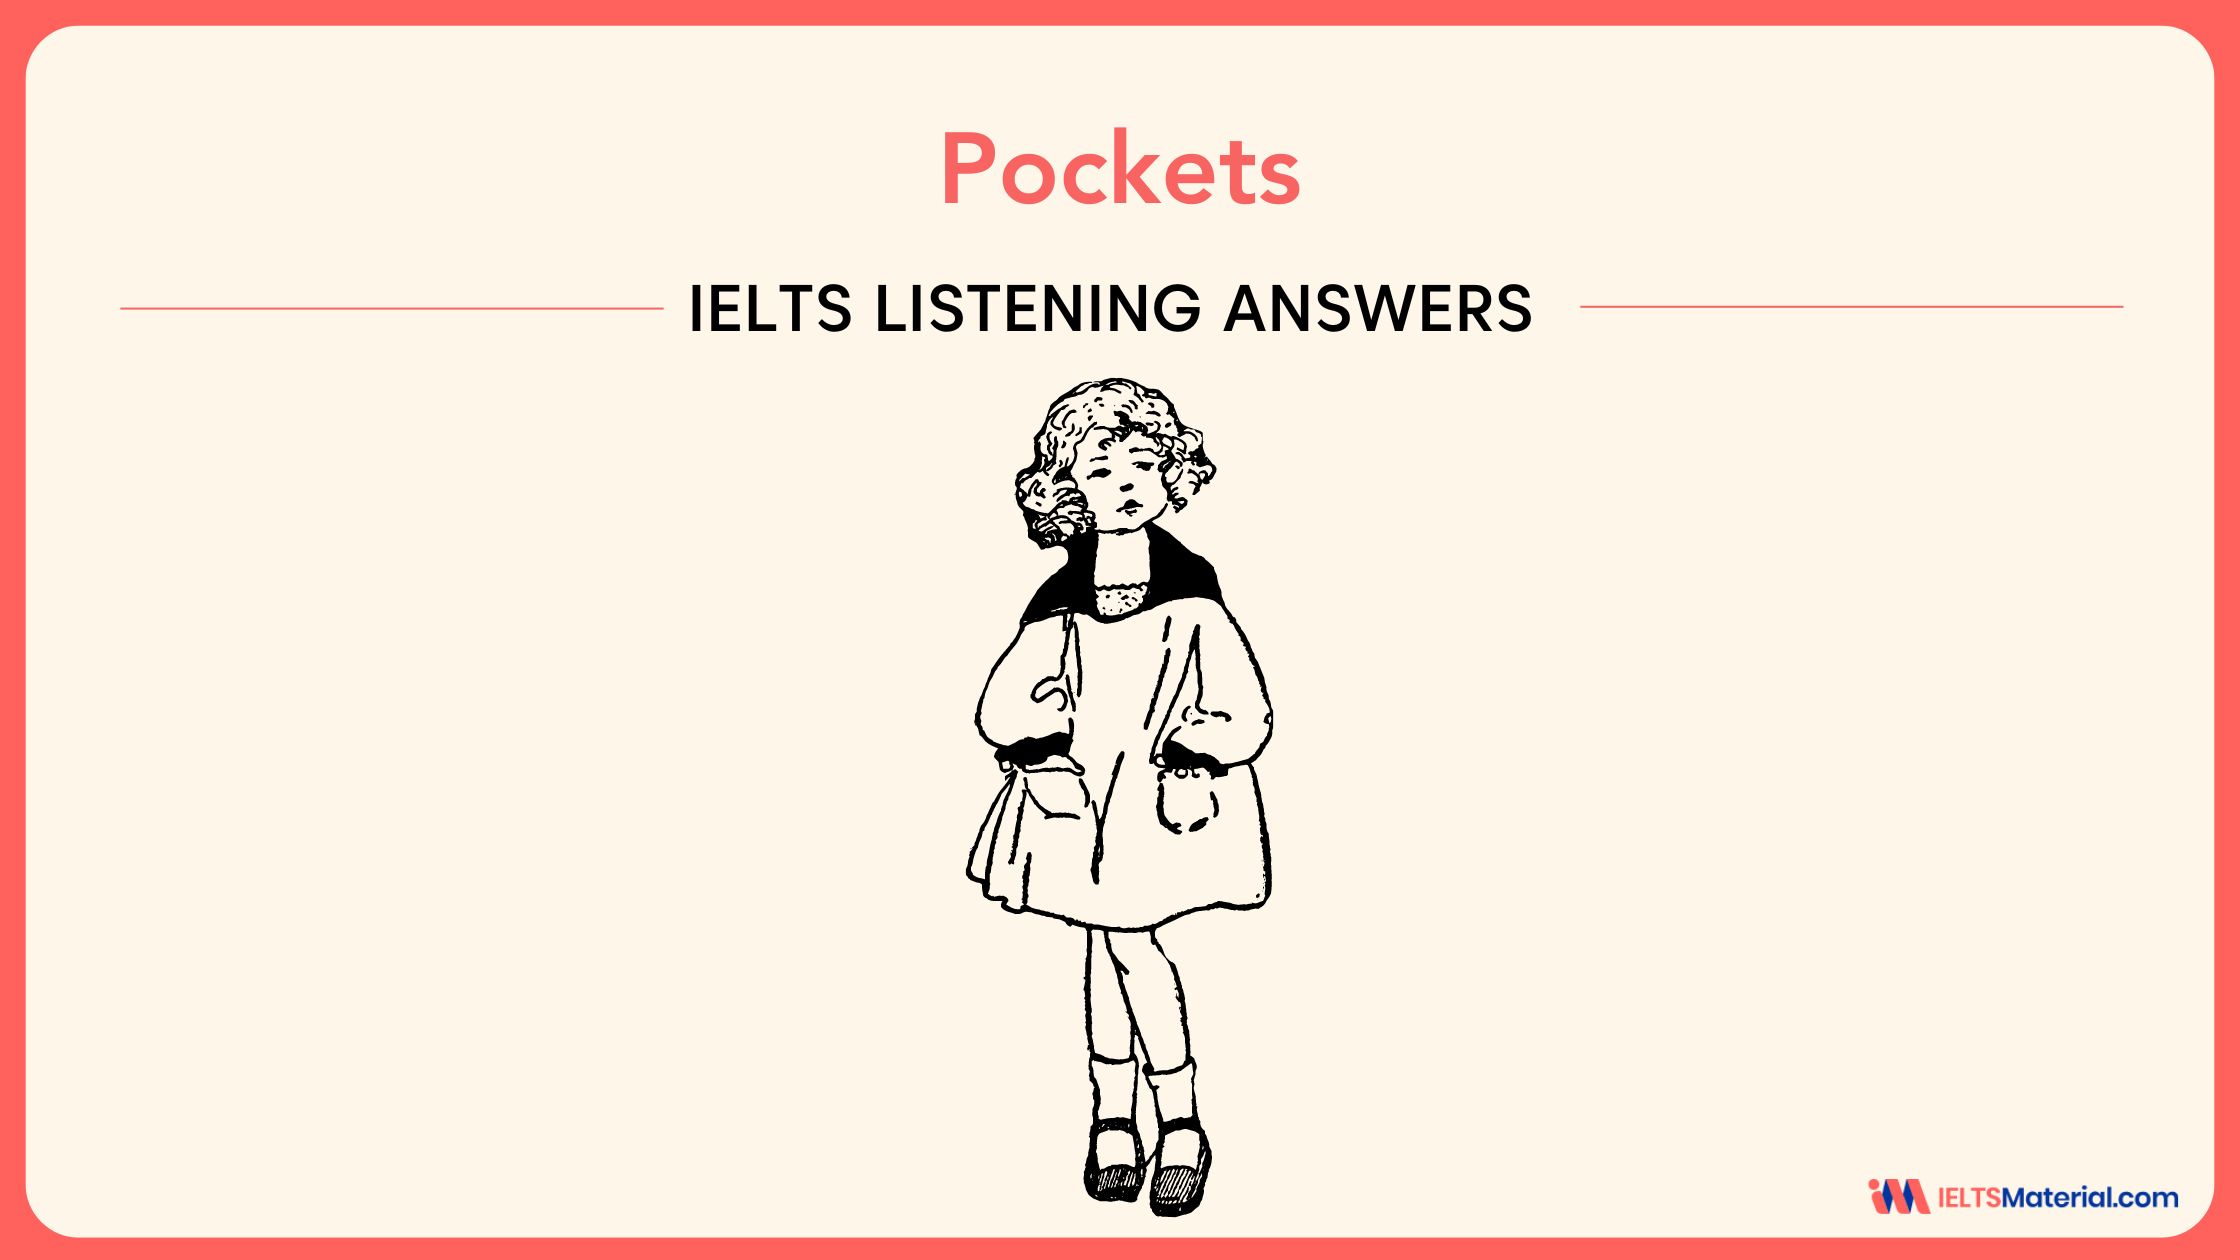 Pockets – IELTS Listening Answers